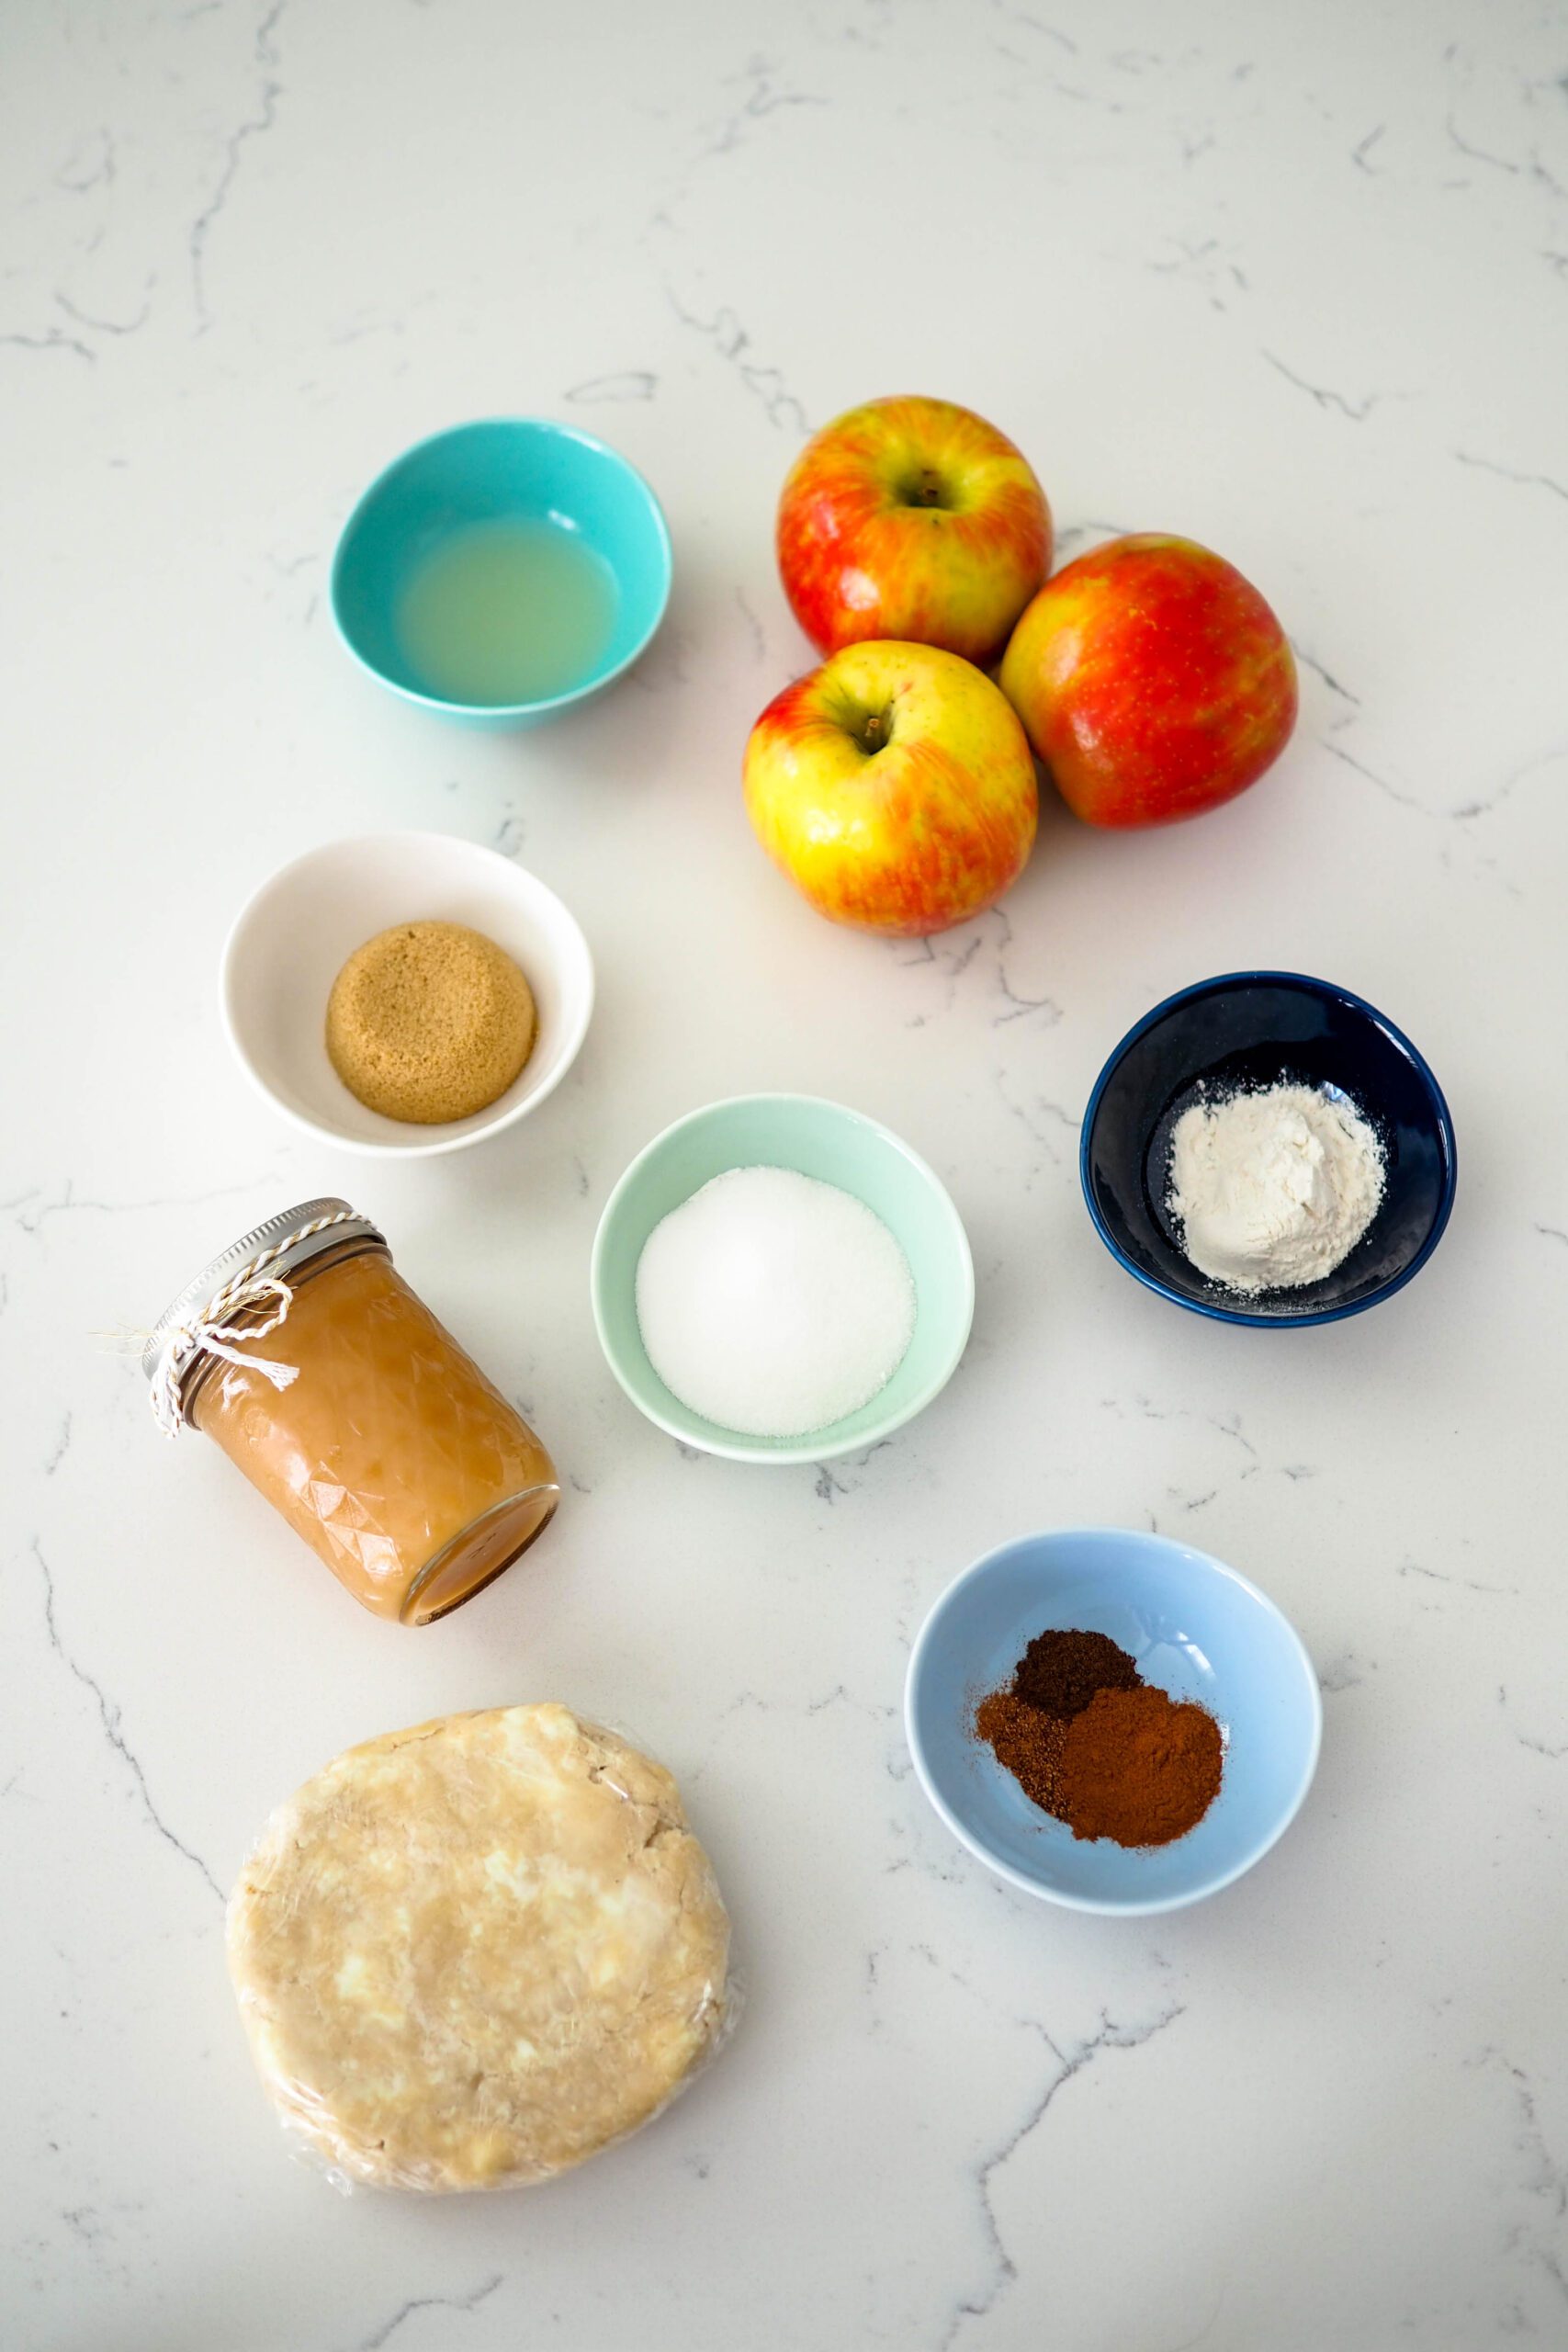 Ingredients used in making mini caramel apple pies.